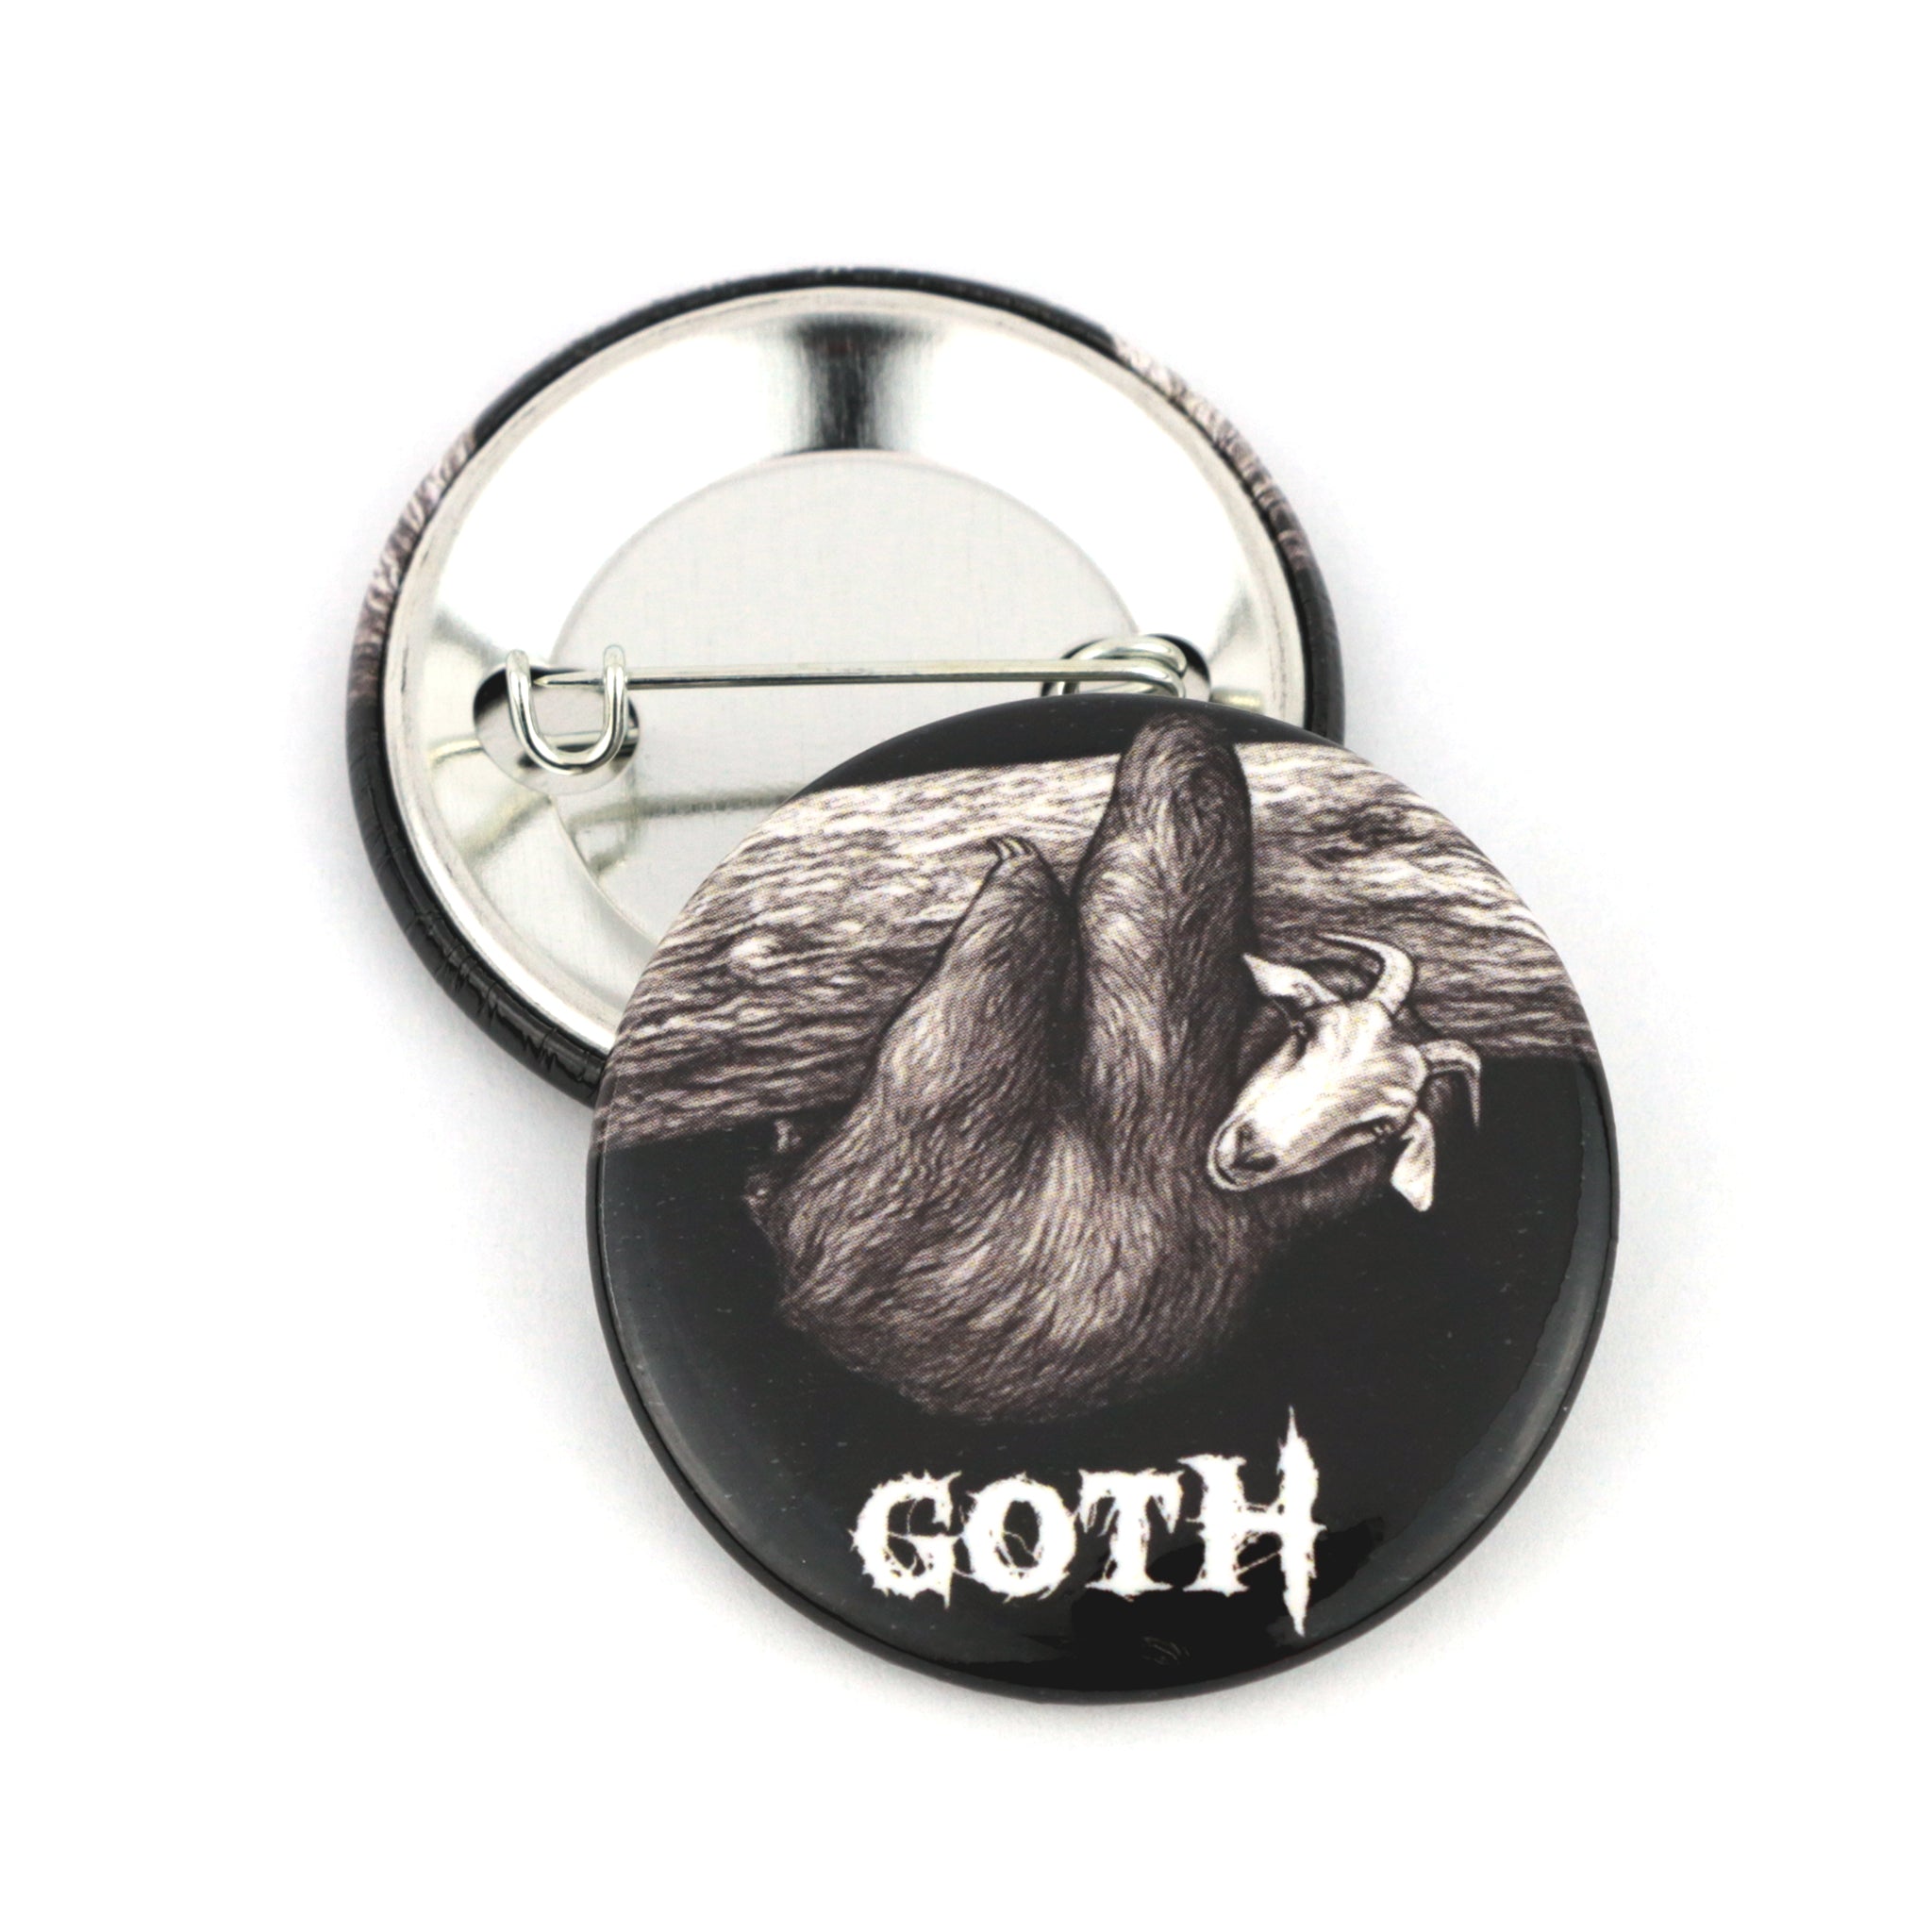 Goth | Goat + Sloth Hybrid Animal | 1.5" Pinback Button